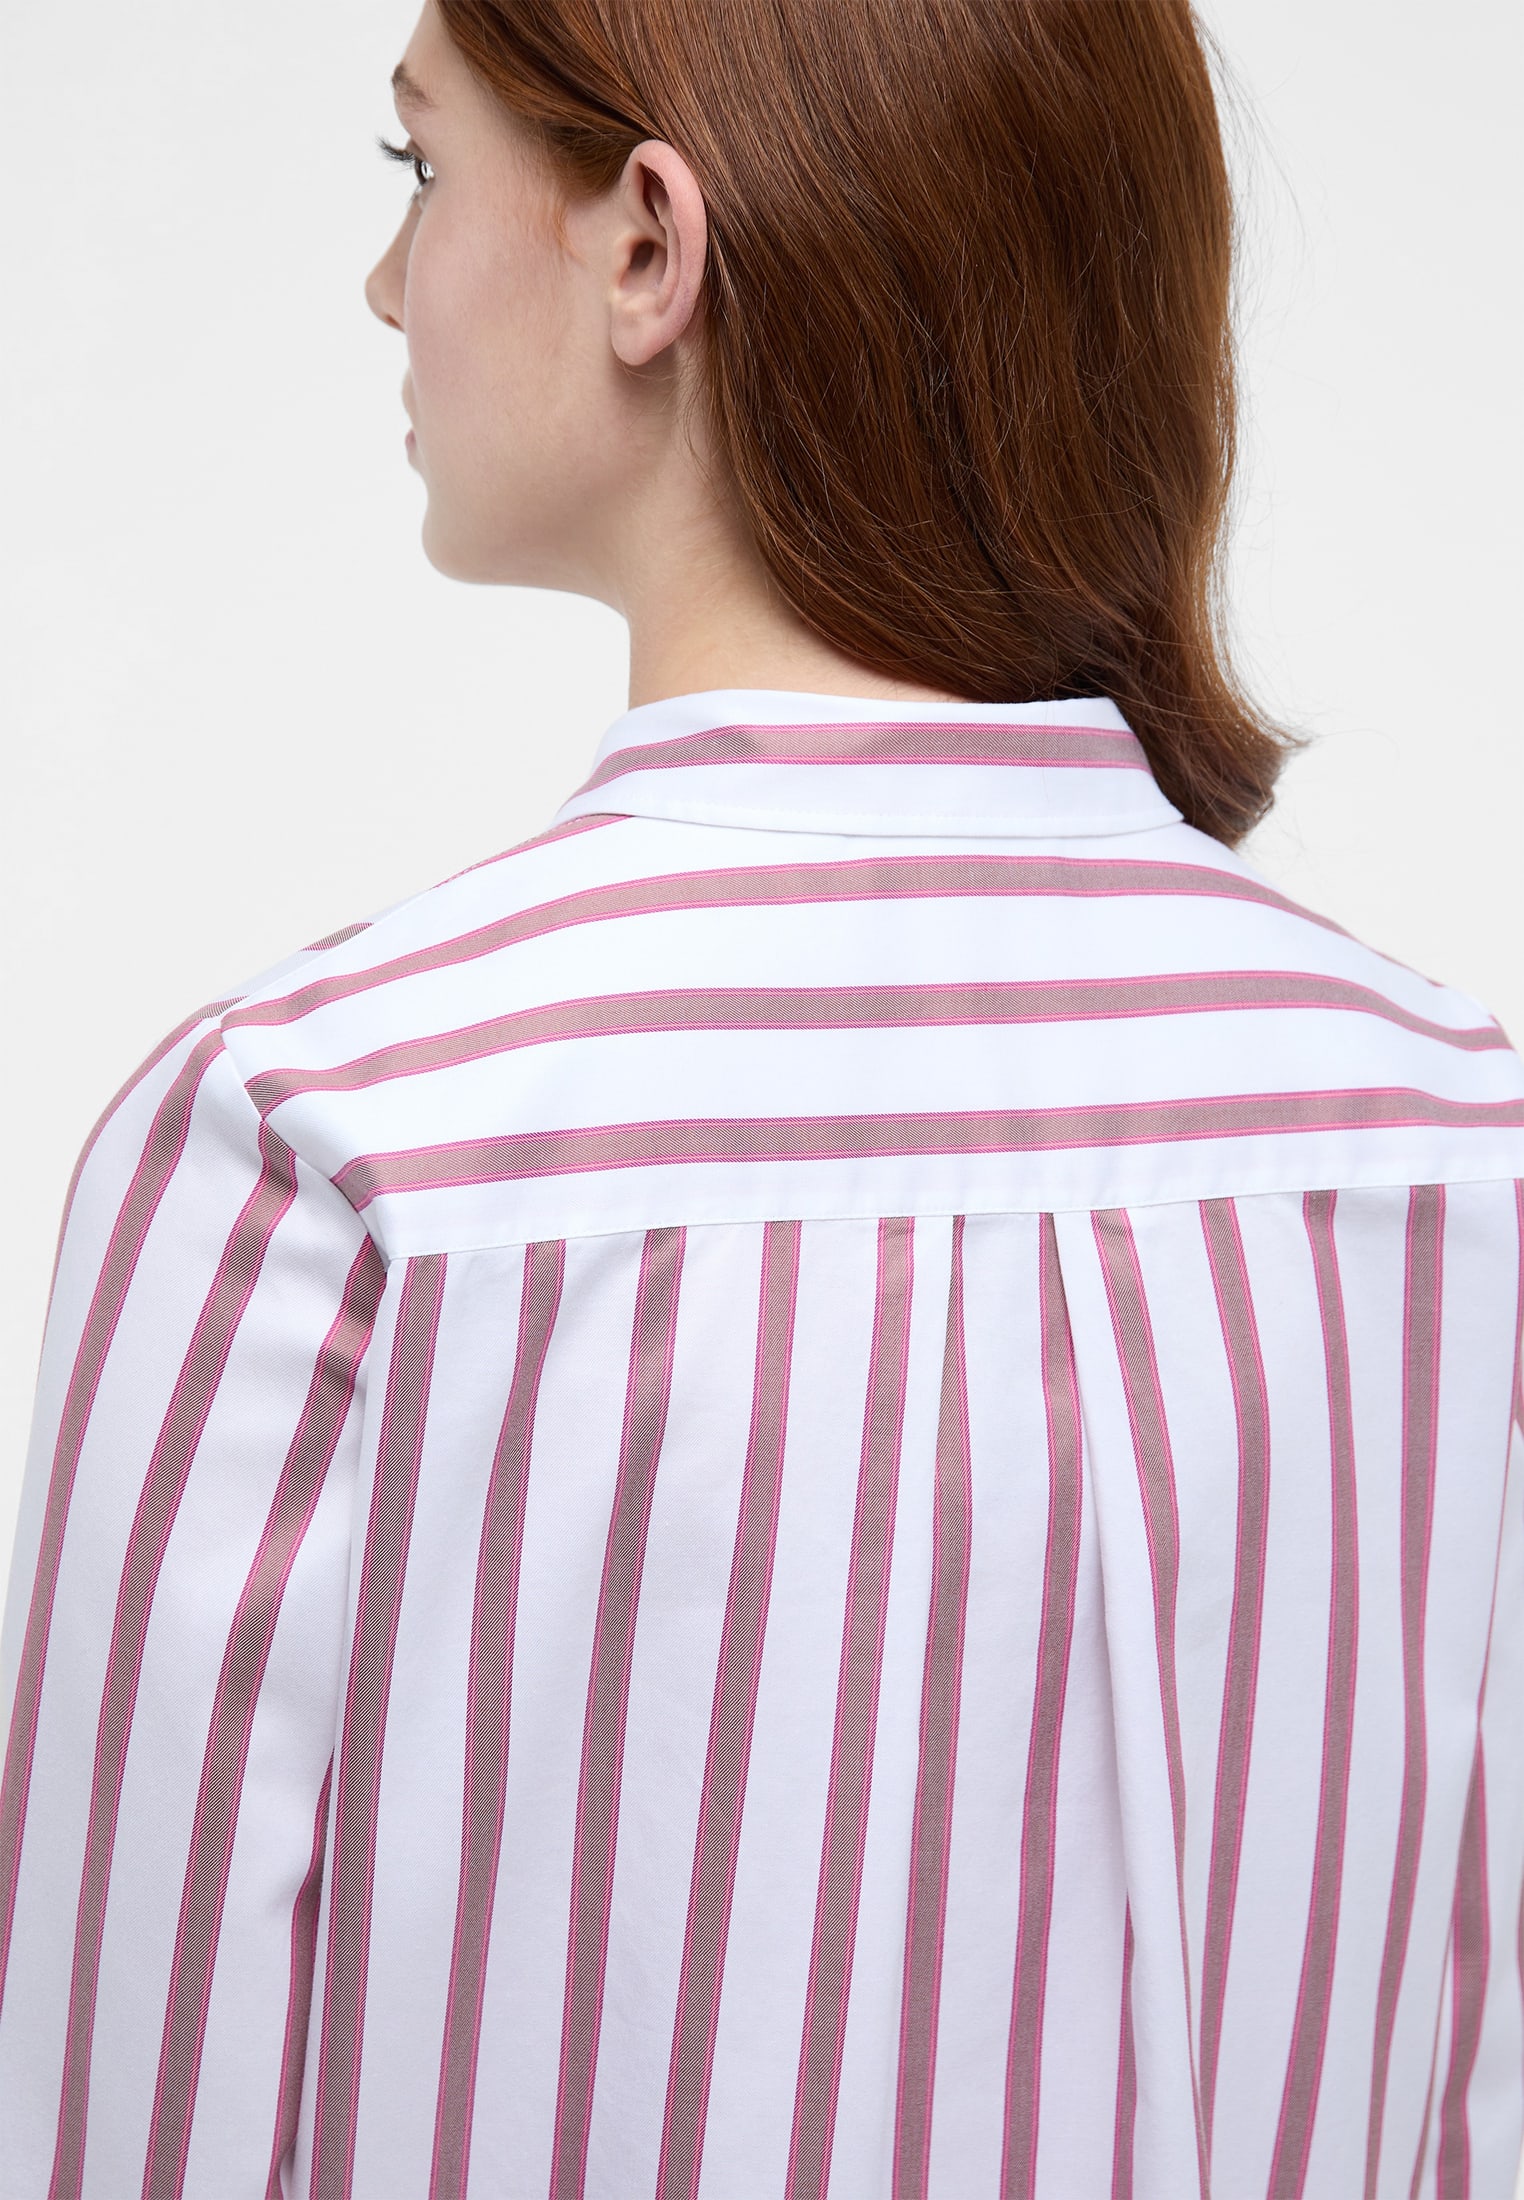 | | Shirt Luxury | gestreift 46 in pink 2BL04213-15-21-46-1/1 Soft pink Bluse | Langarm